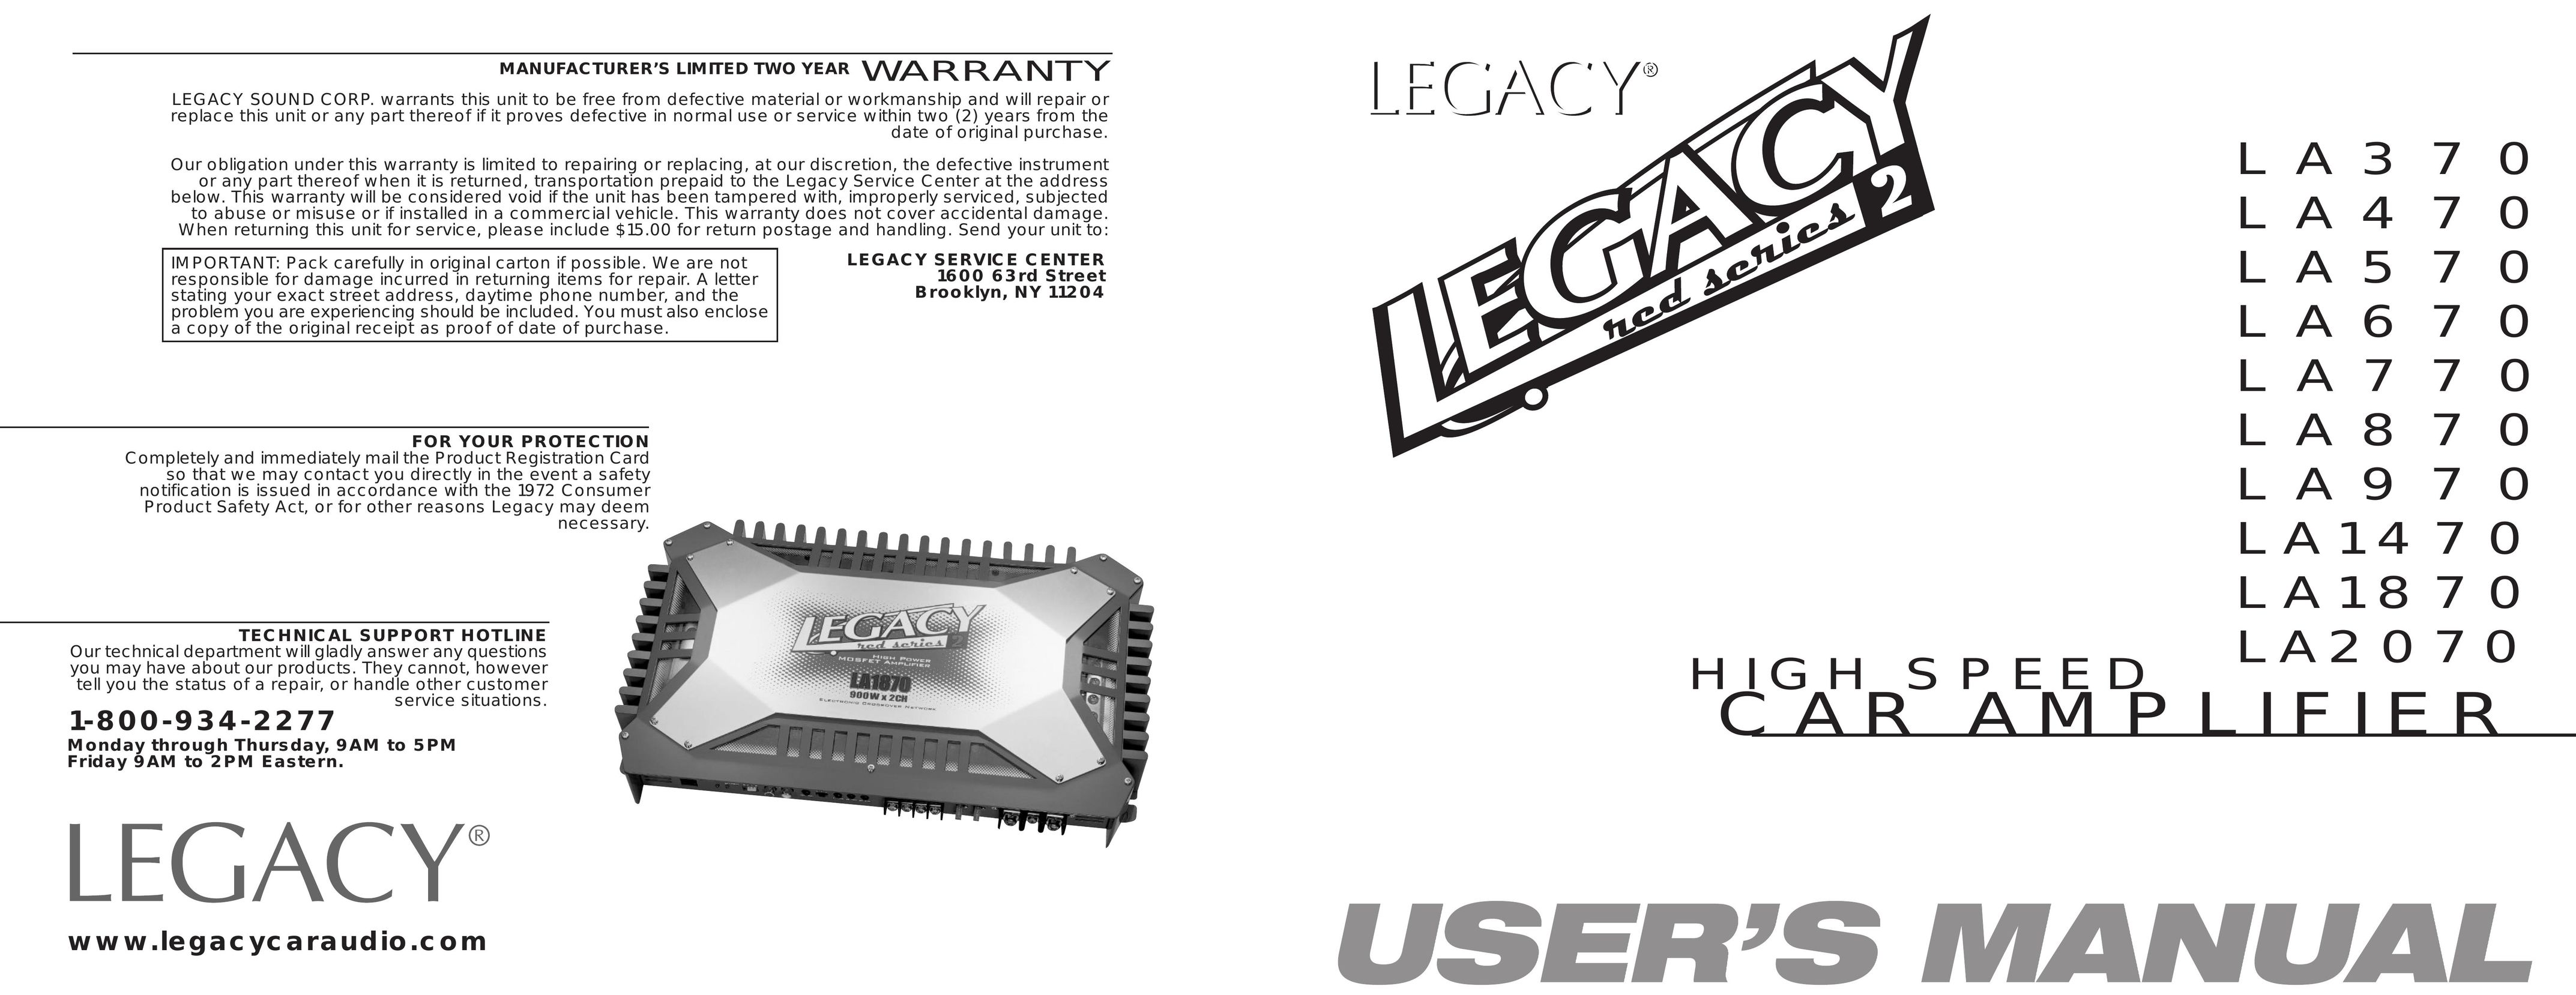 Legacy Car Audio LA1470 Car Amplifier User Manual